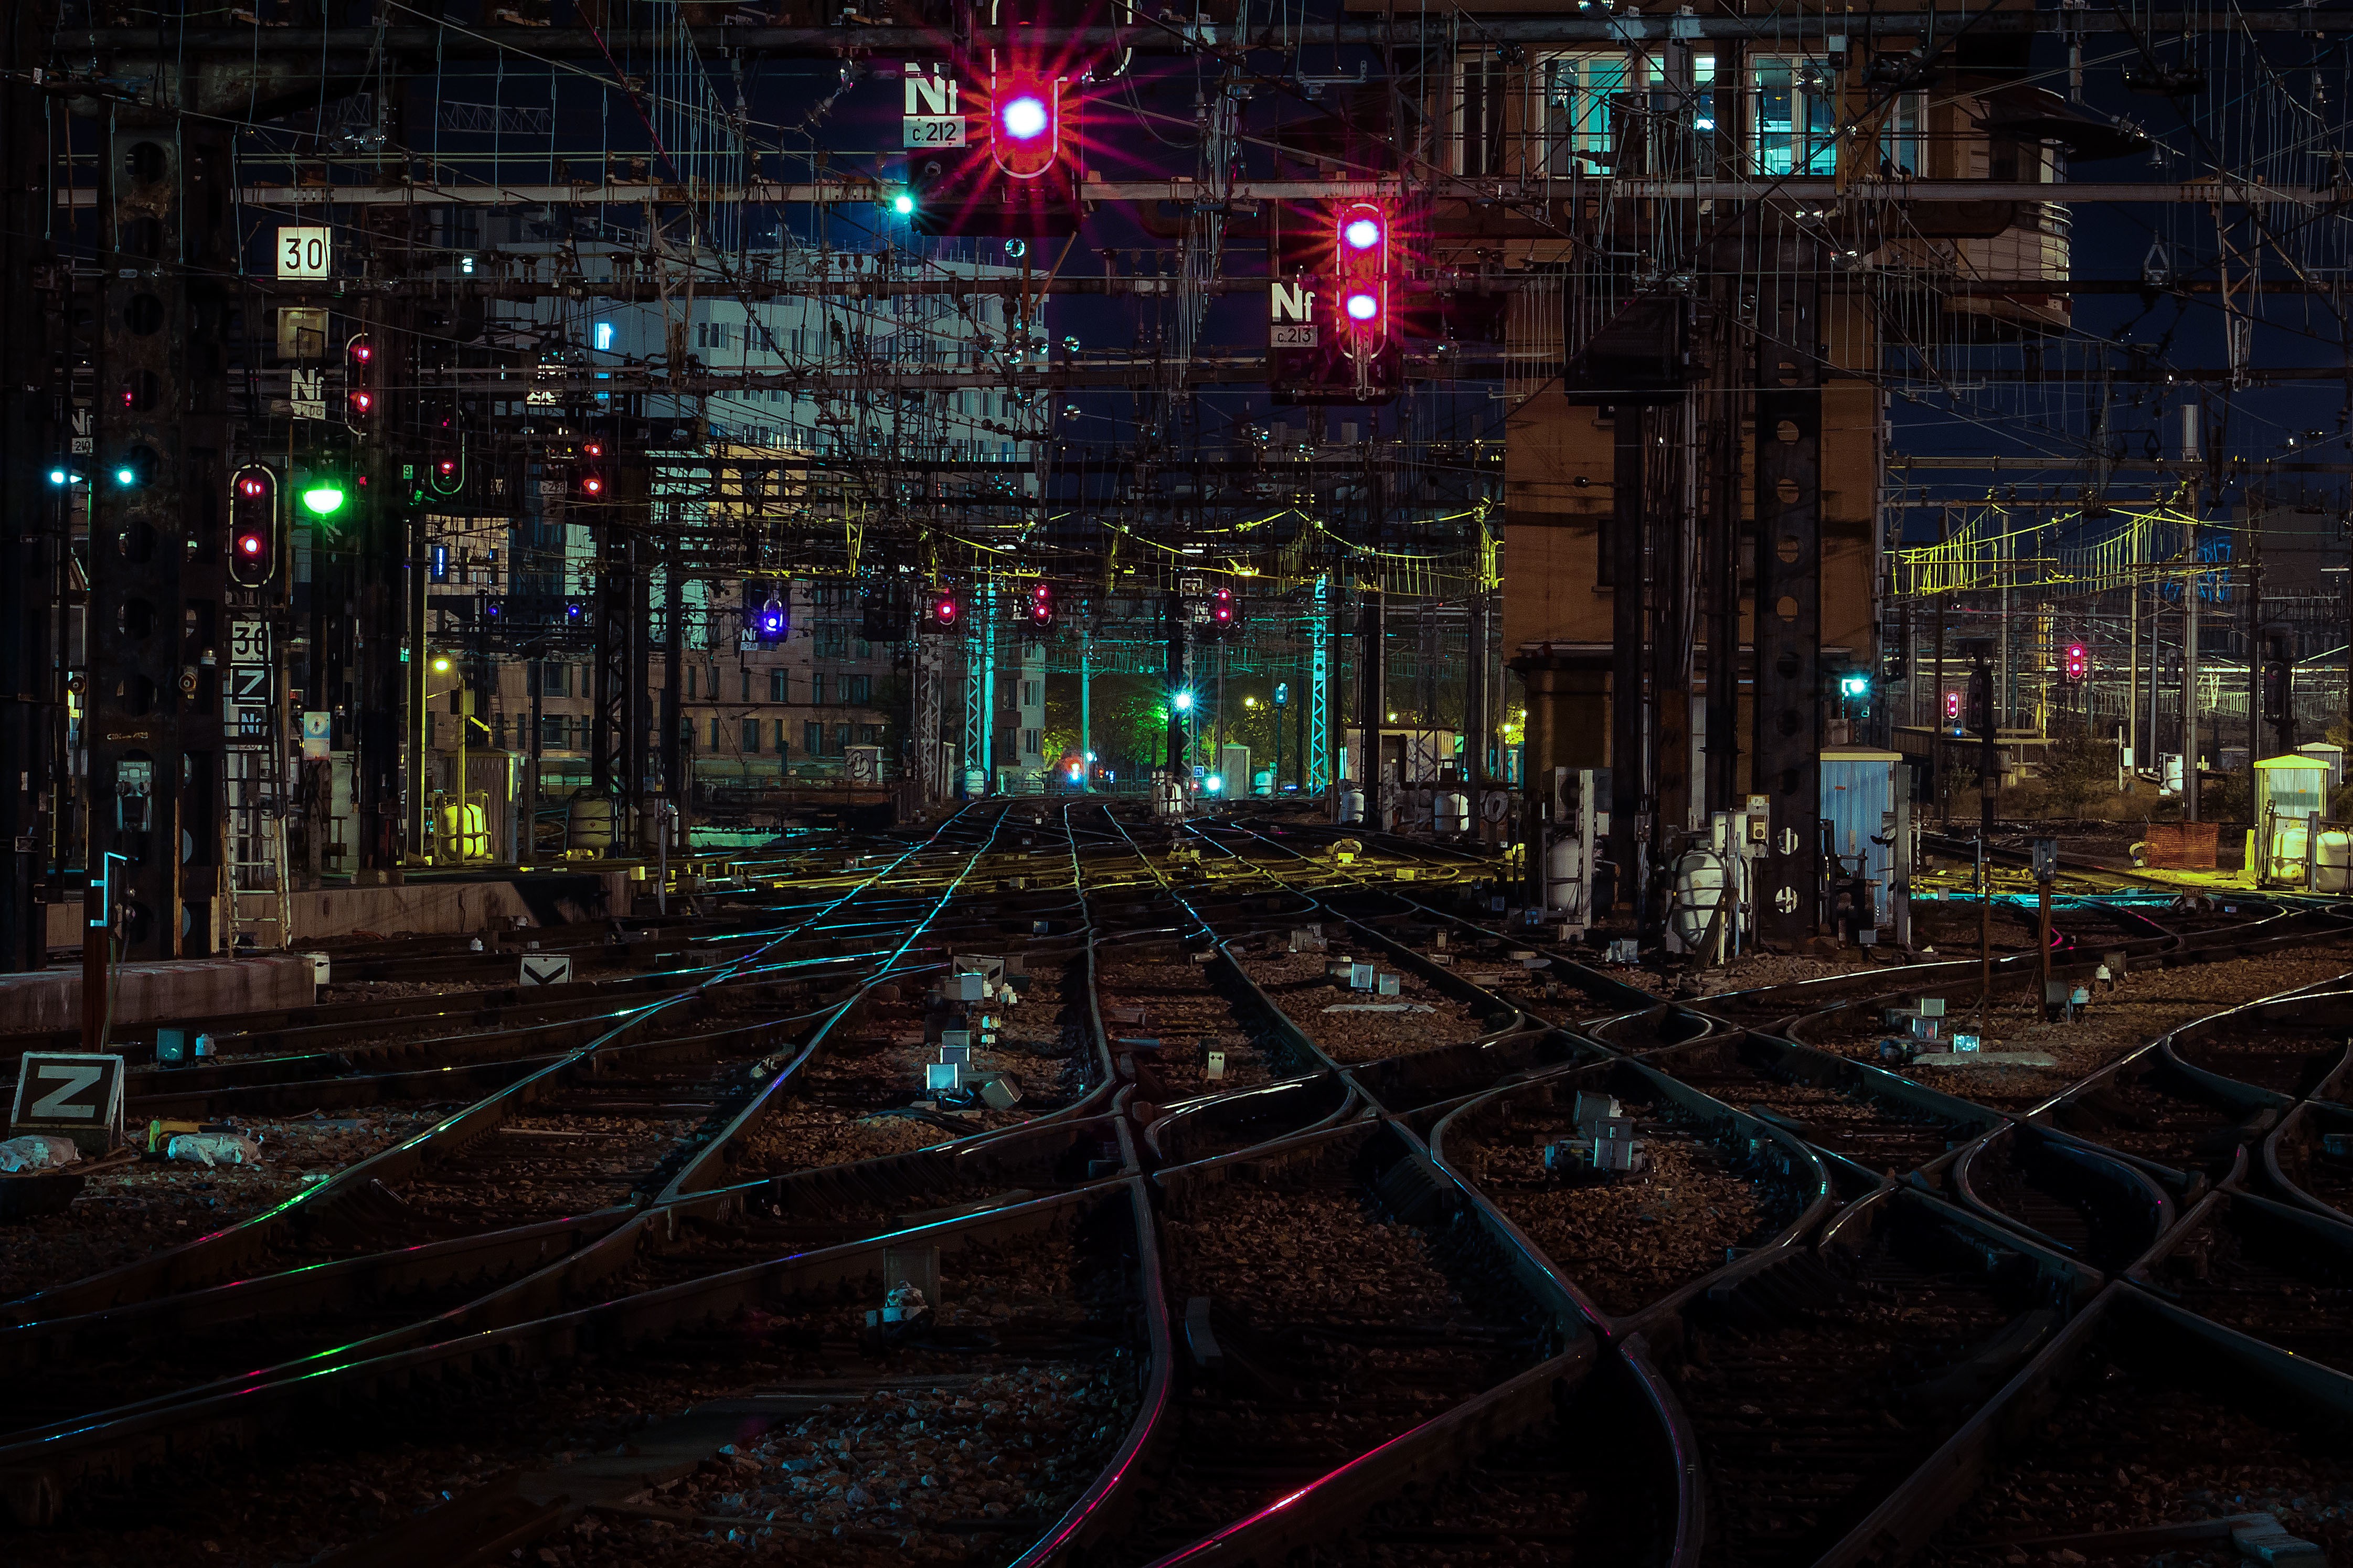 City City Lights Railway Rail Yard Night 4485x2989